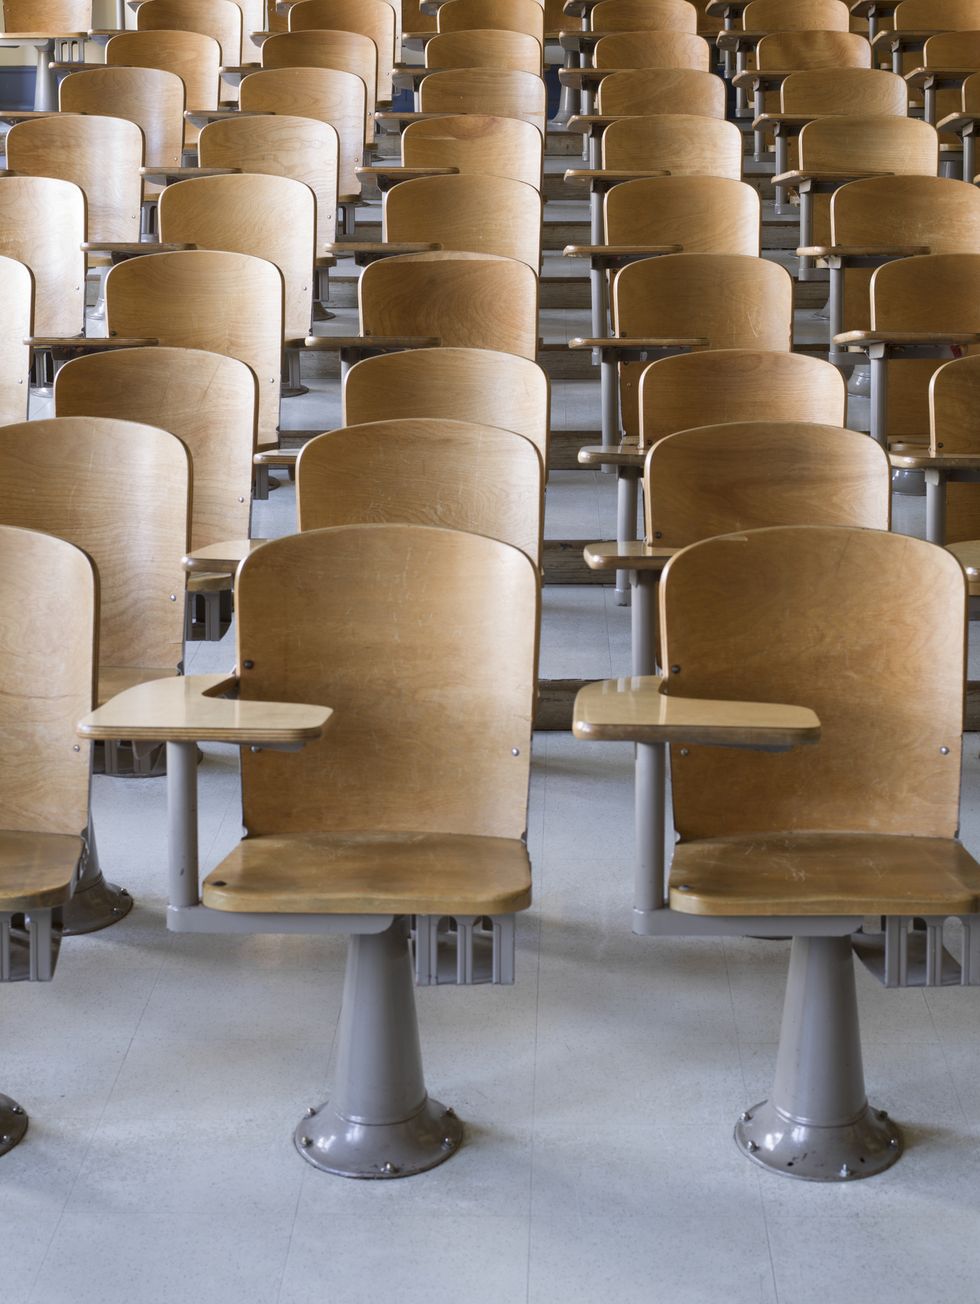 rows of desks in classroom